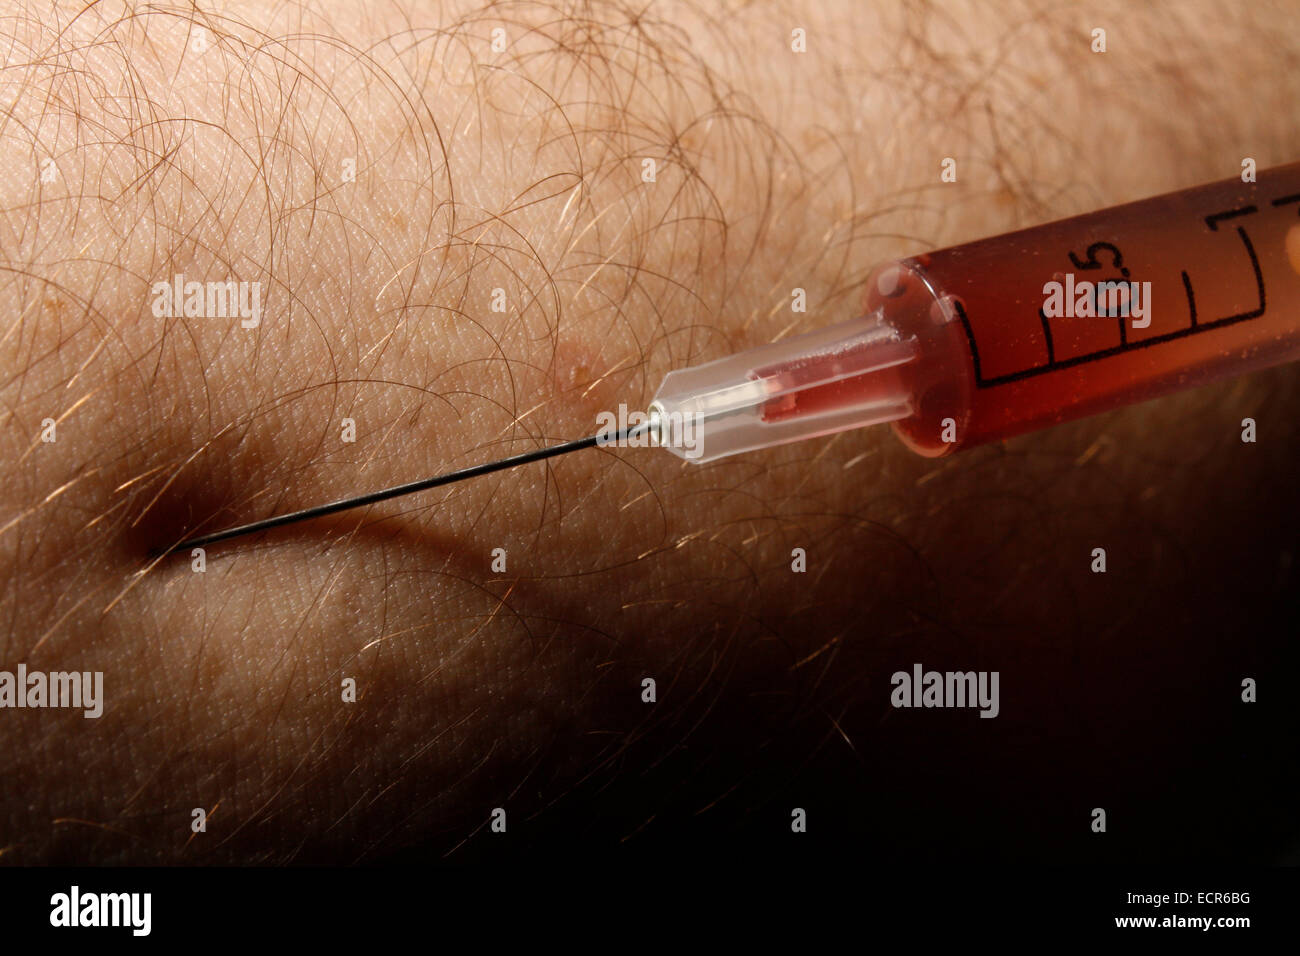 Injektion in den arm Stockfoto